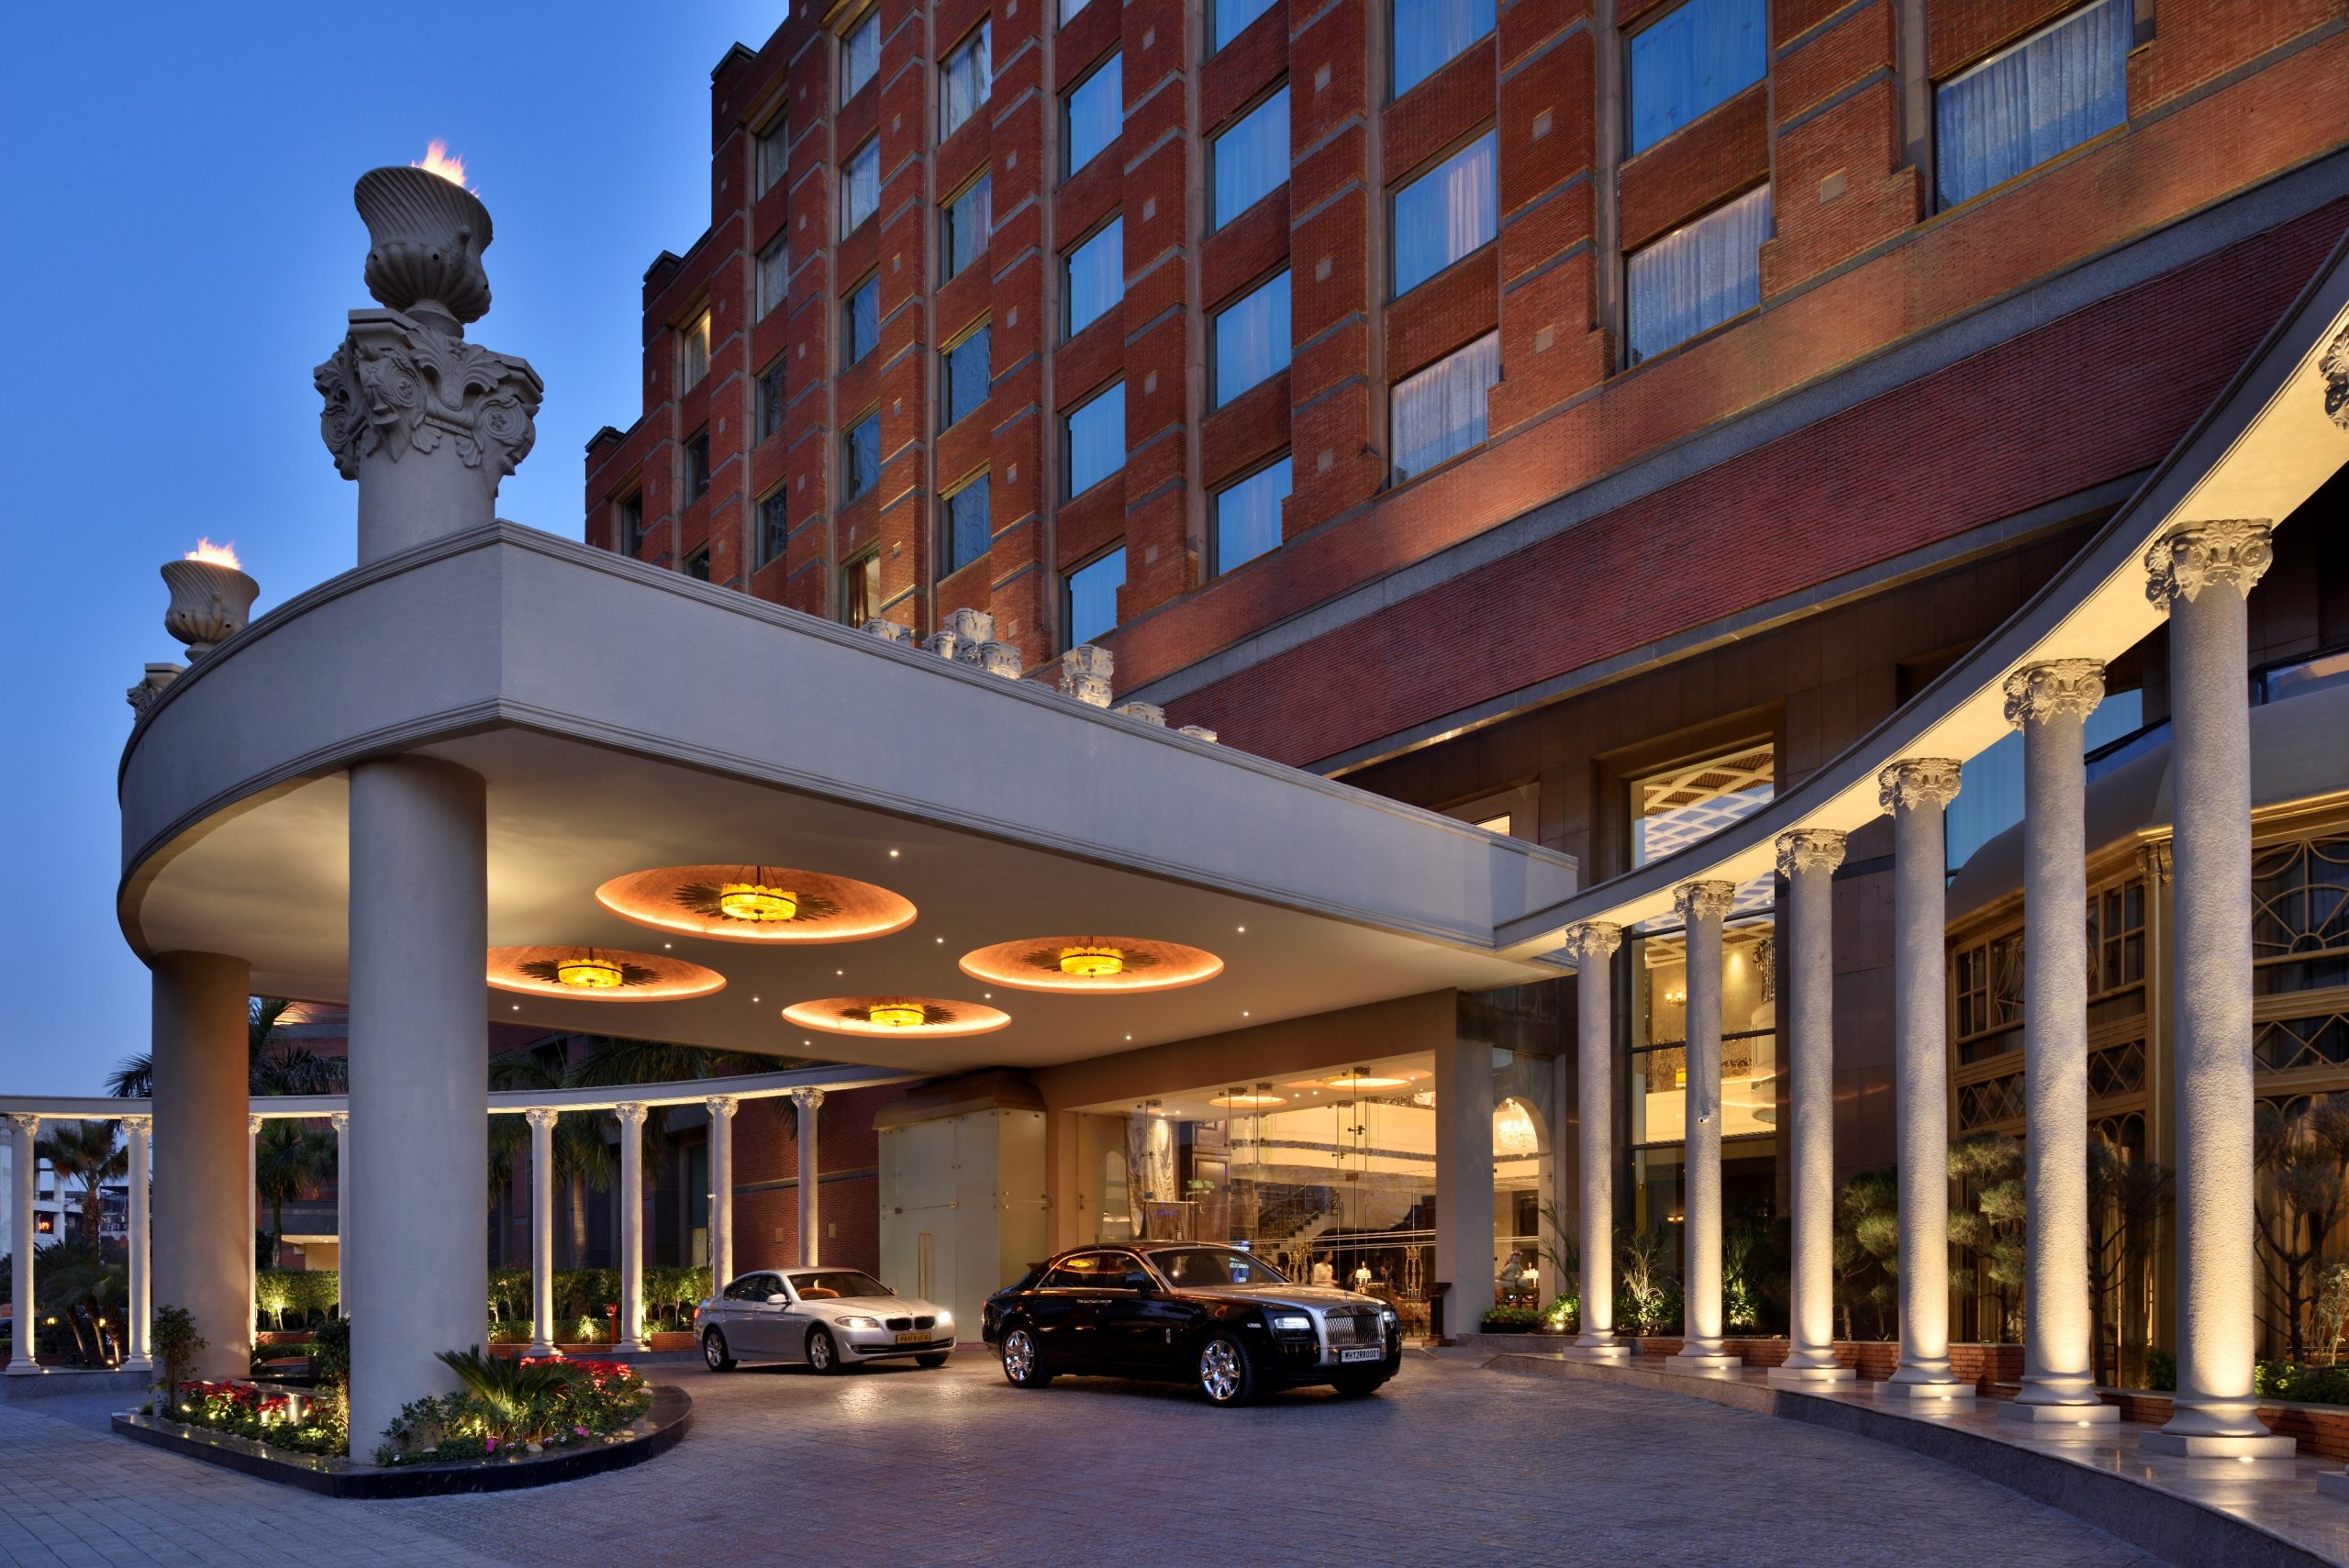 Radisson-Blu-MBD-Hotel-Noida-scaled.jpg